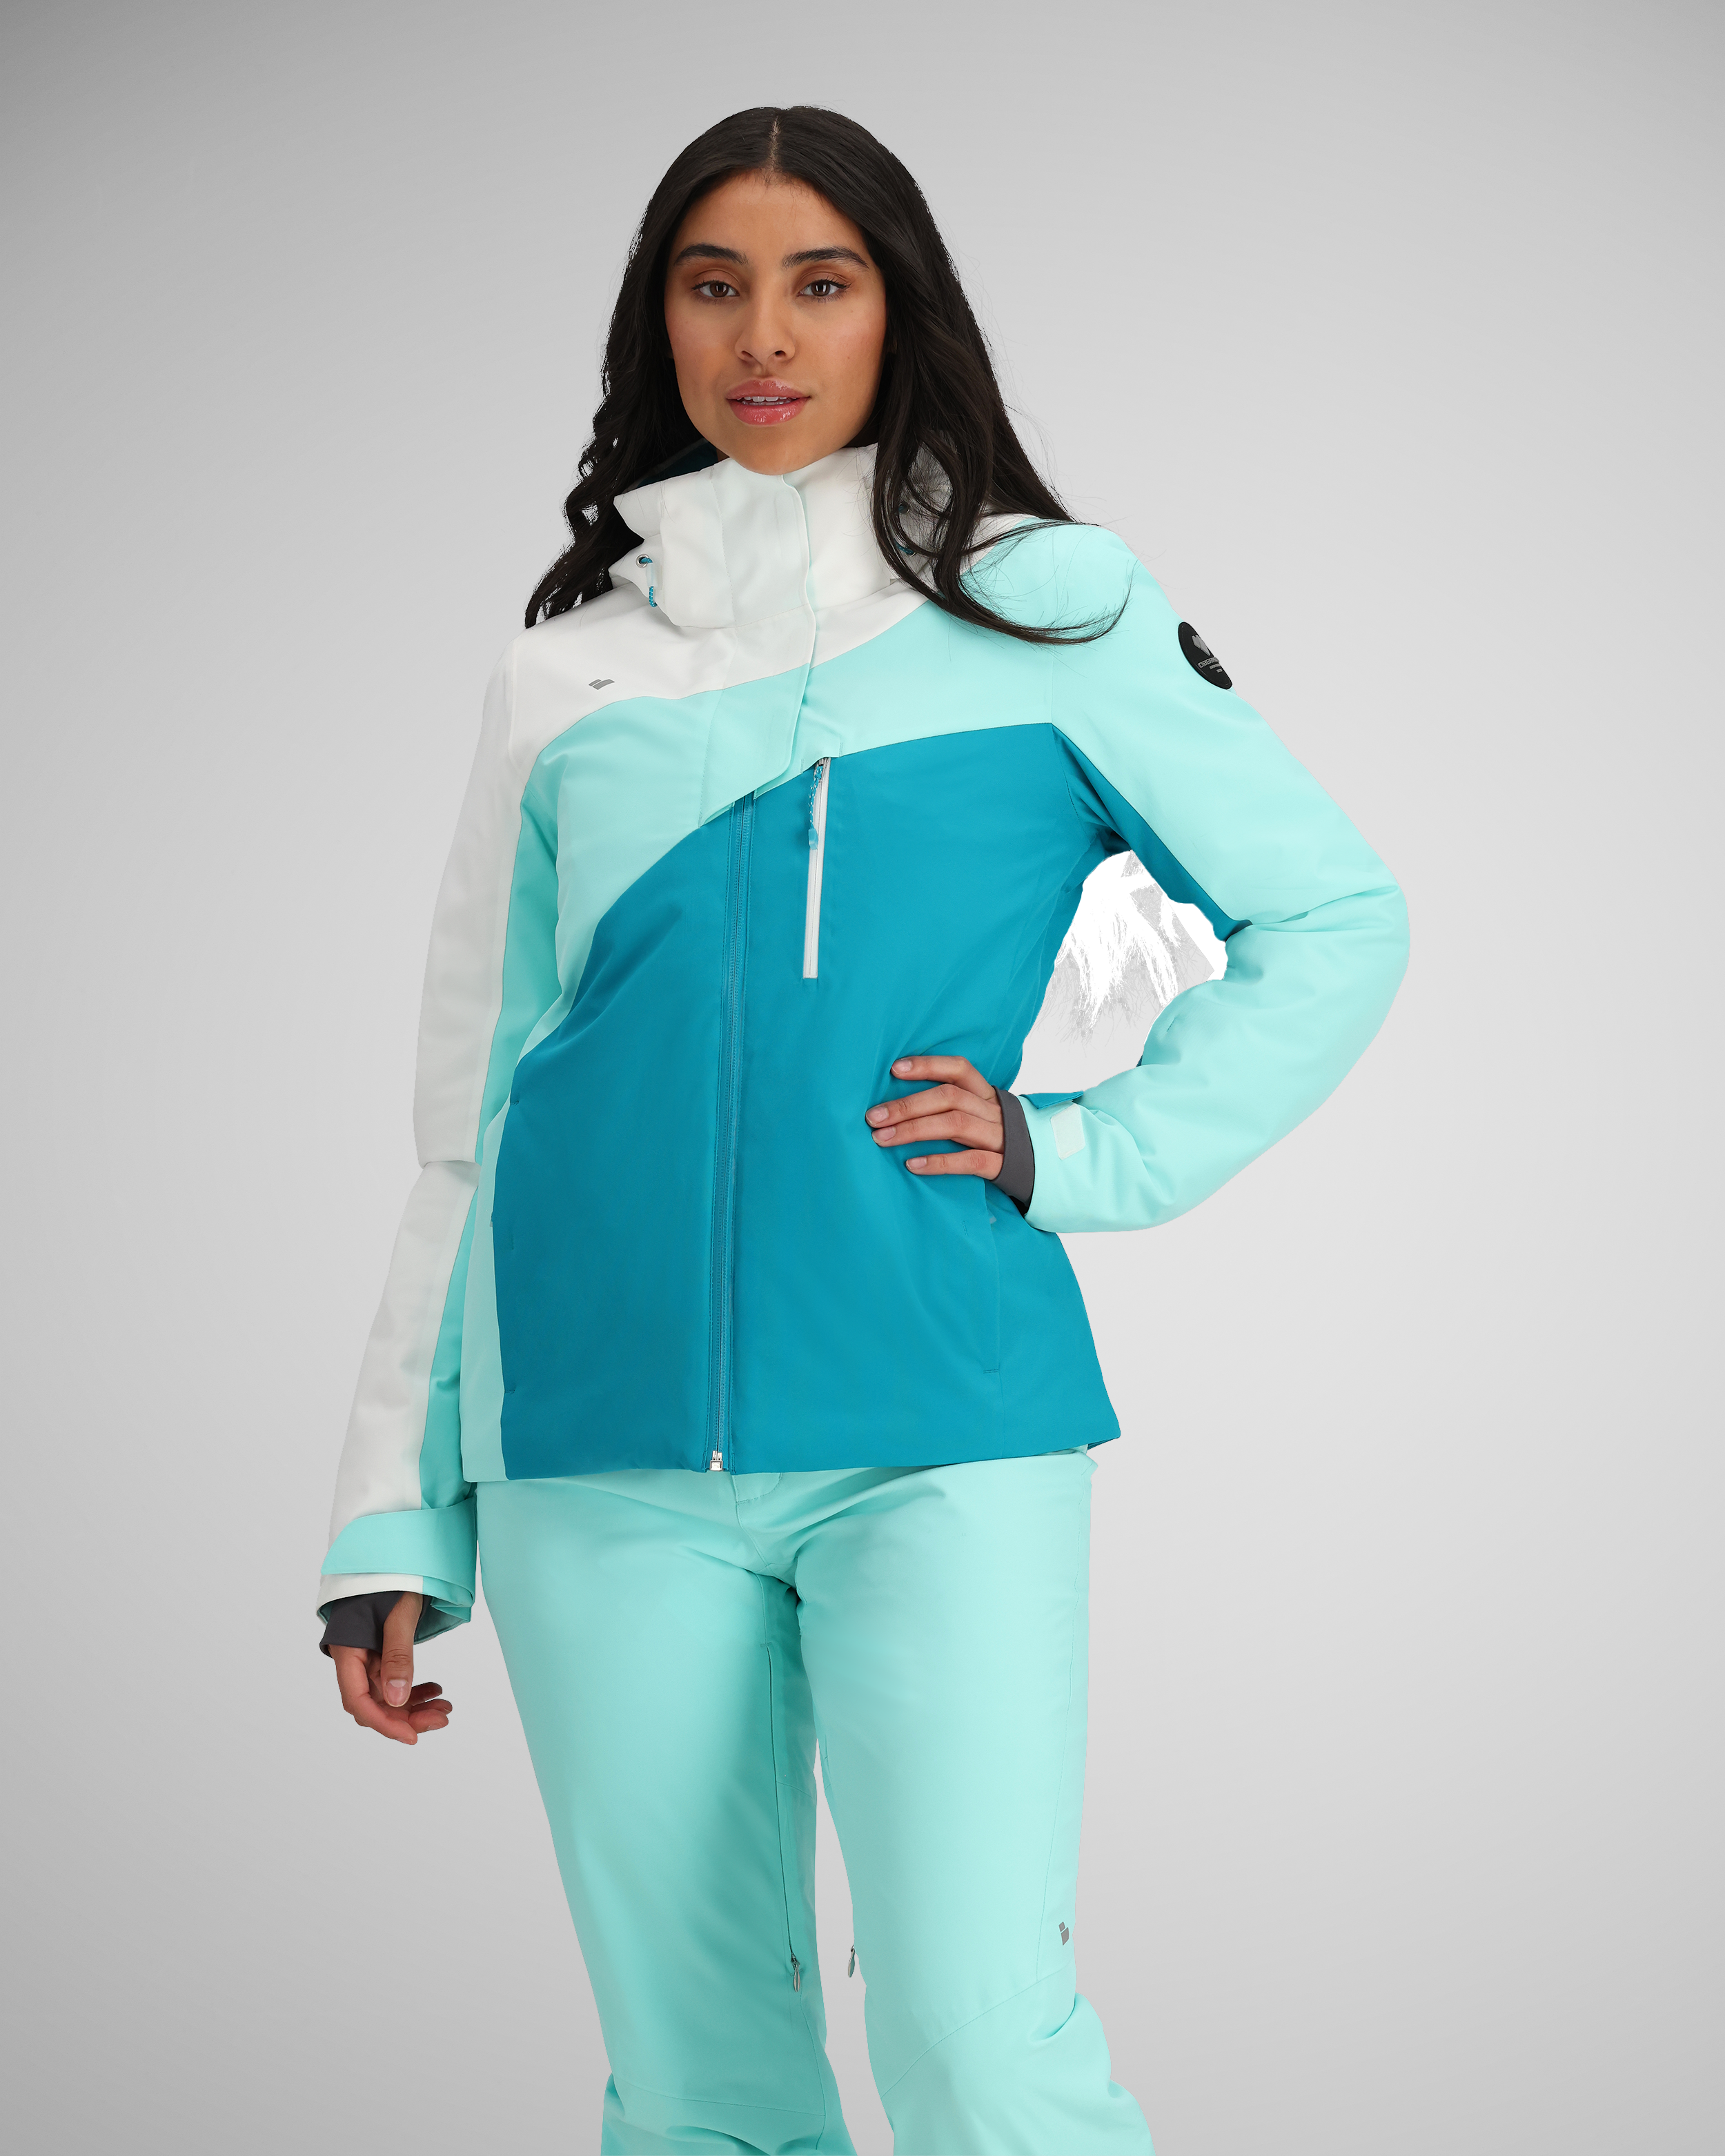 Women's Controle Ski Jacket, Ski & snowboard jackets